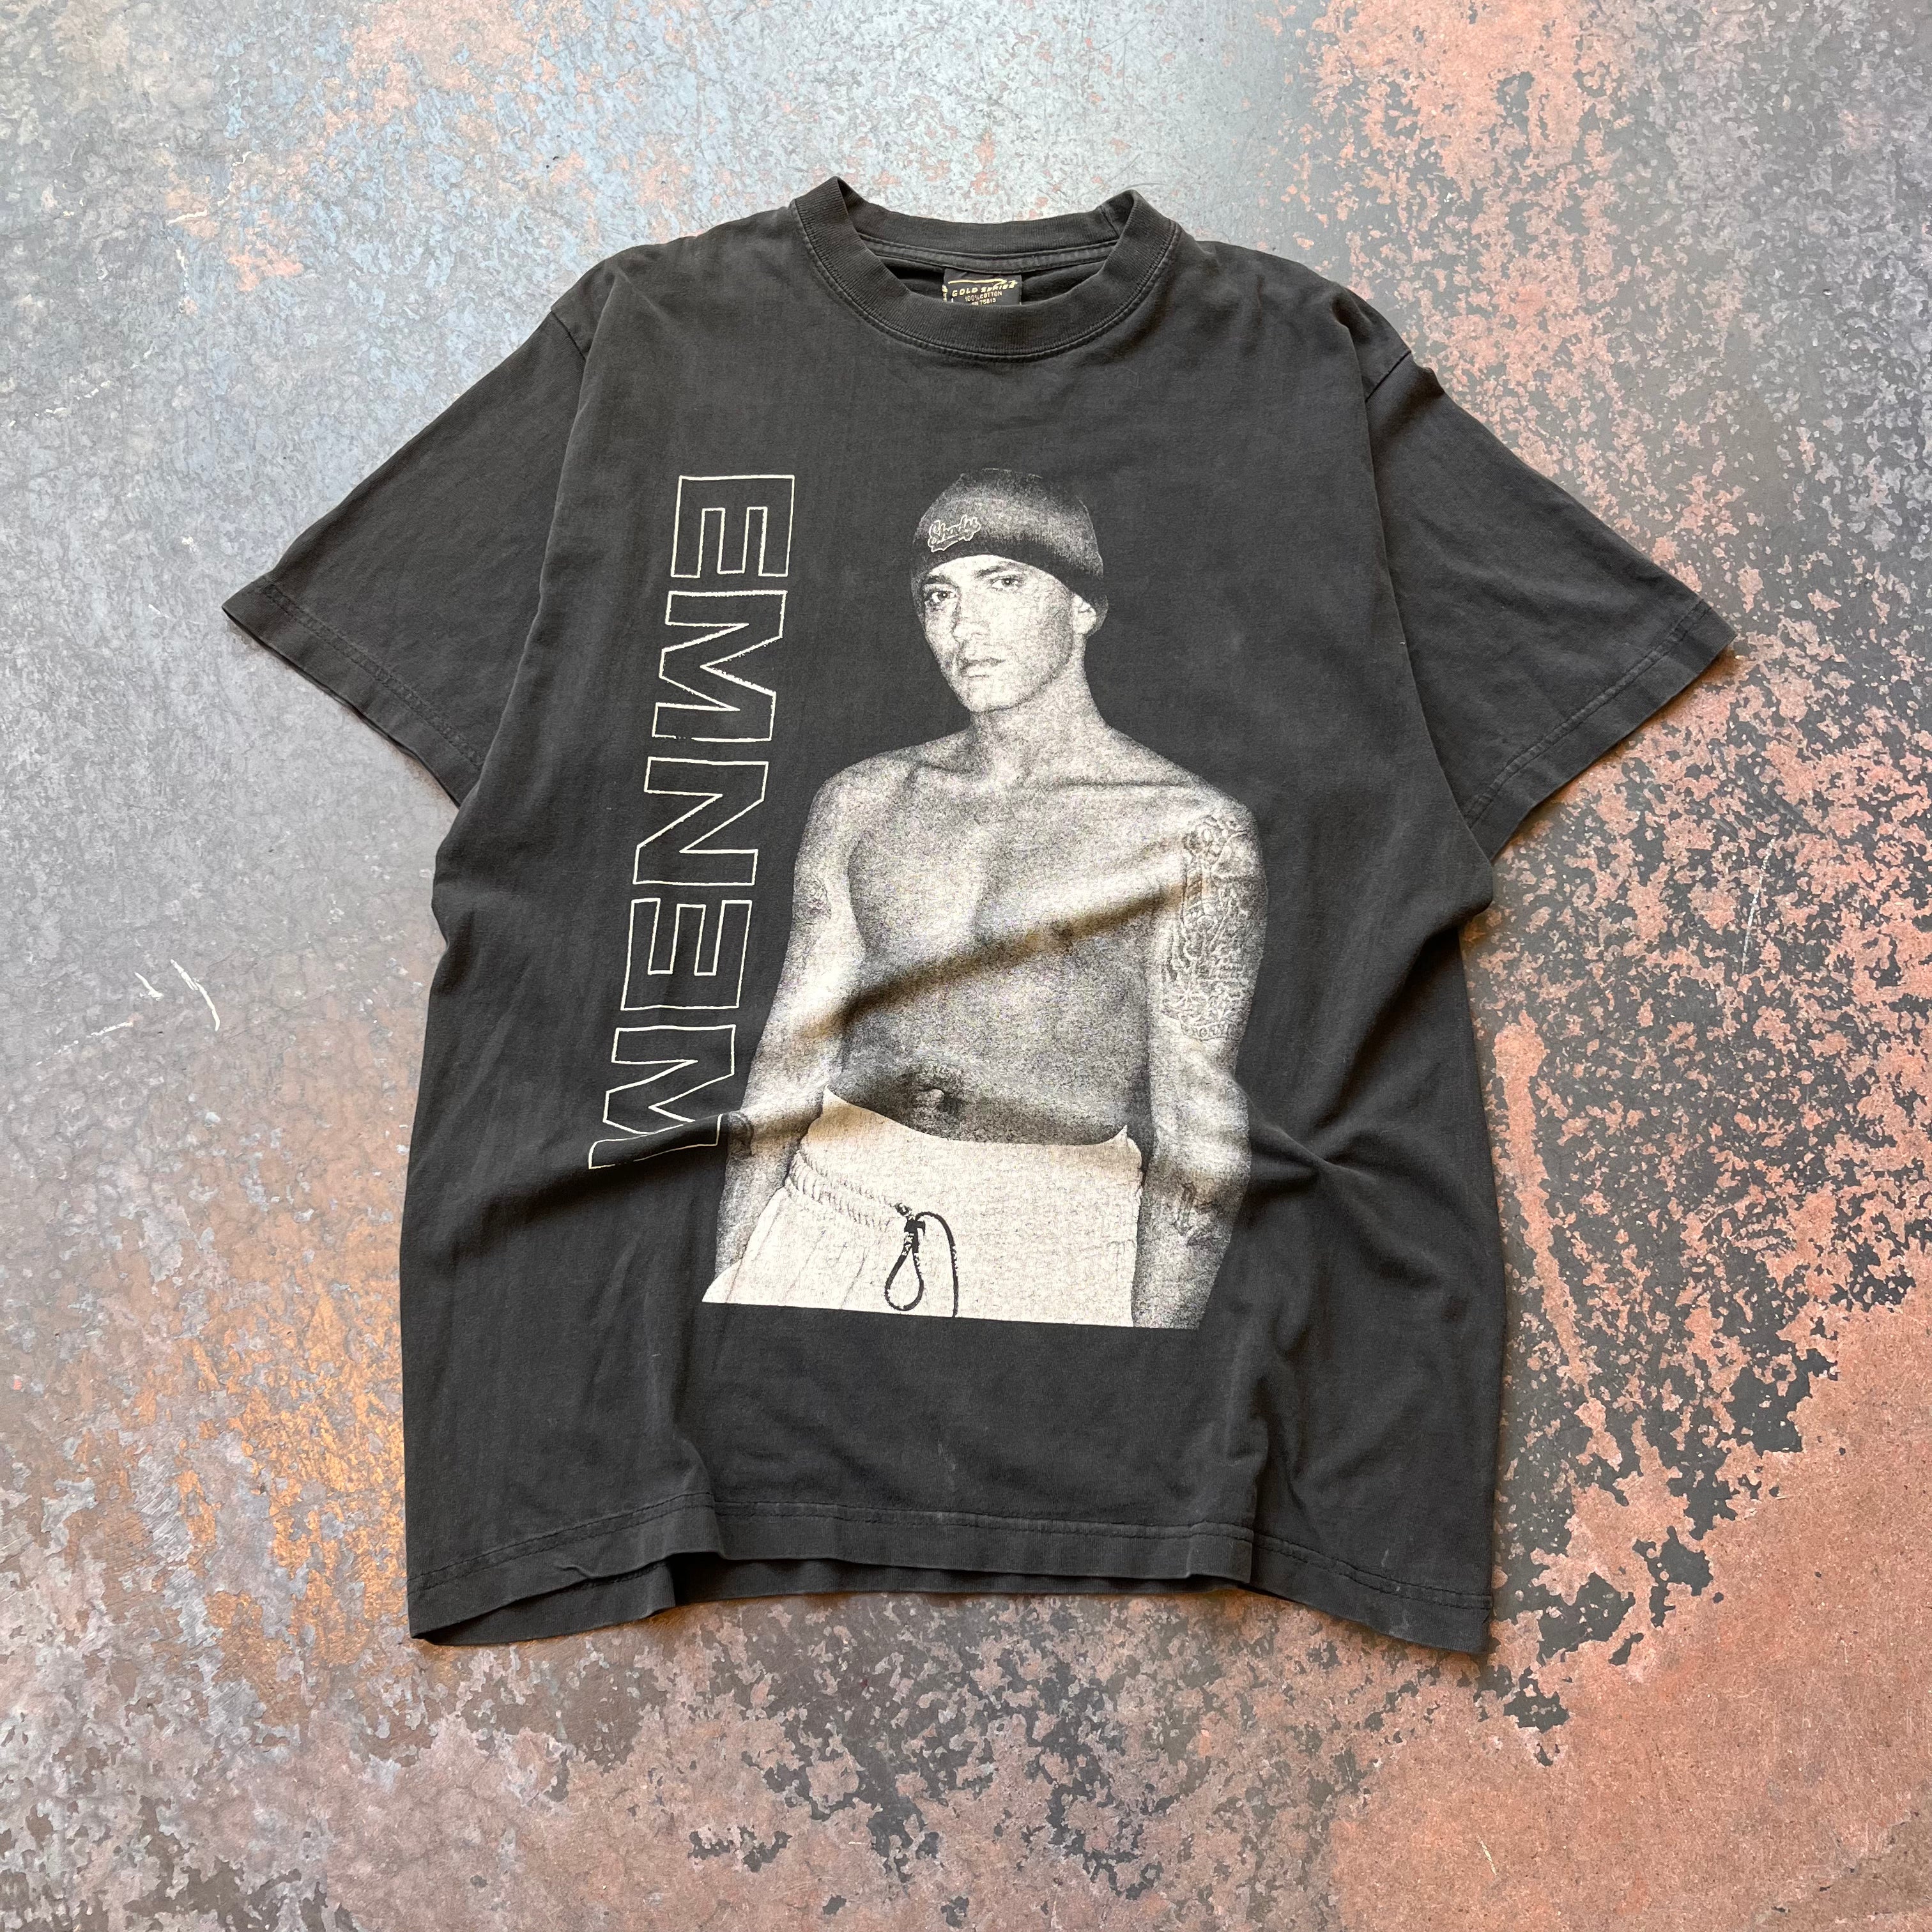 Eminem "Emnem" T-Shirt Size L